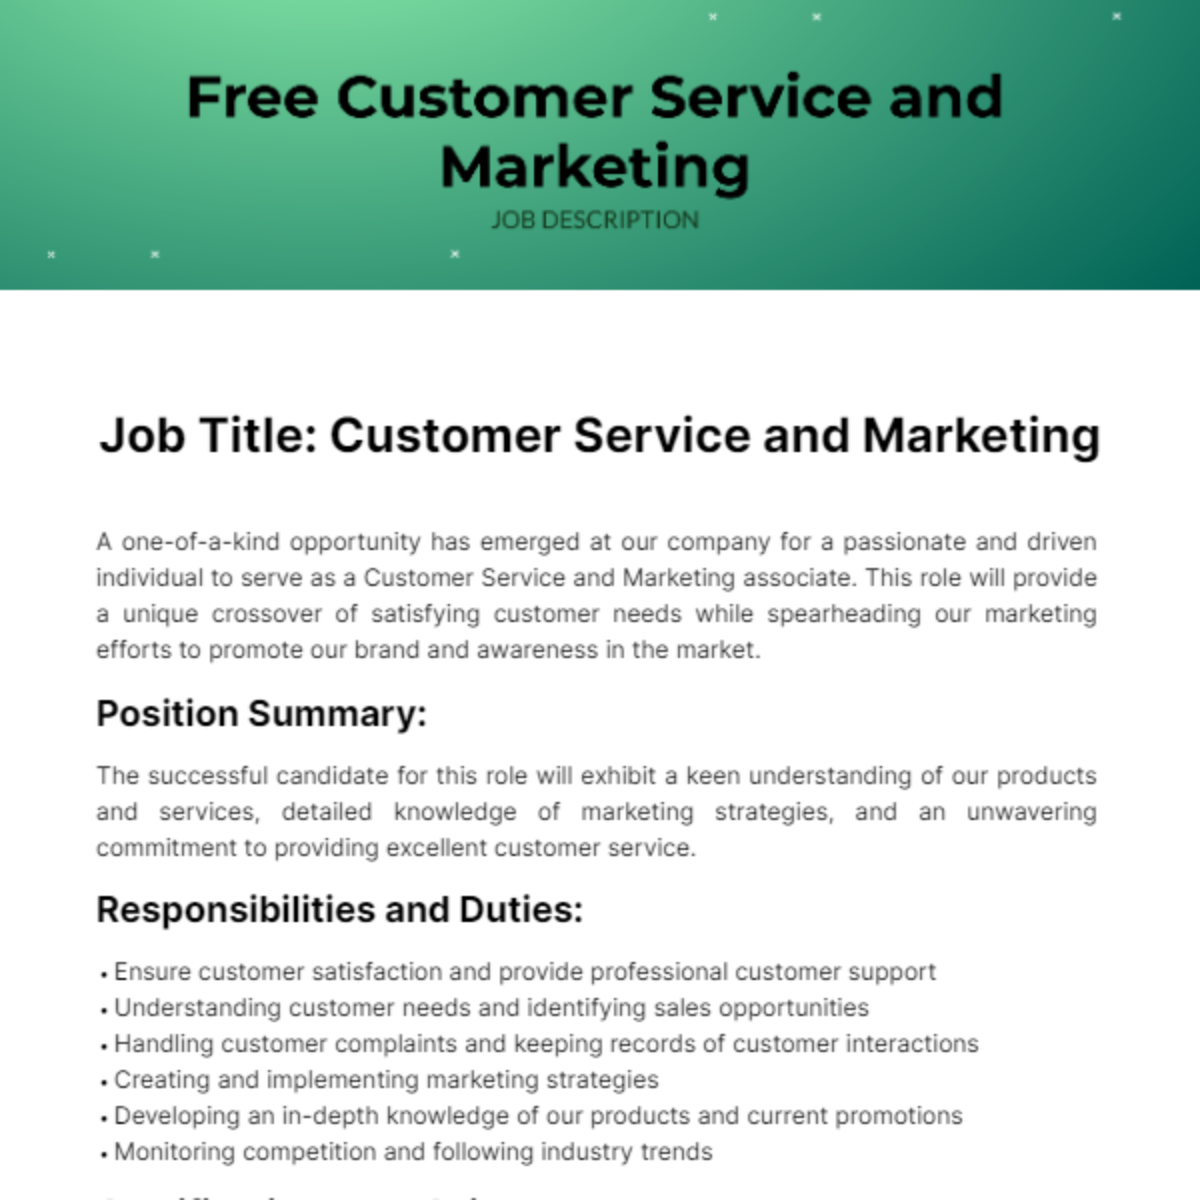 Customer Service and Marketing Job Description Template